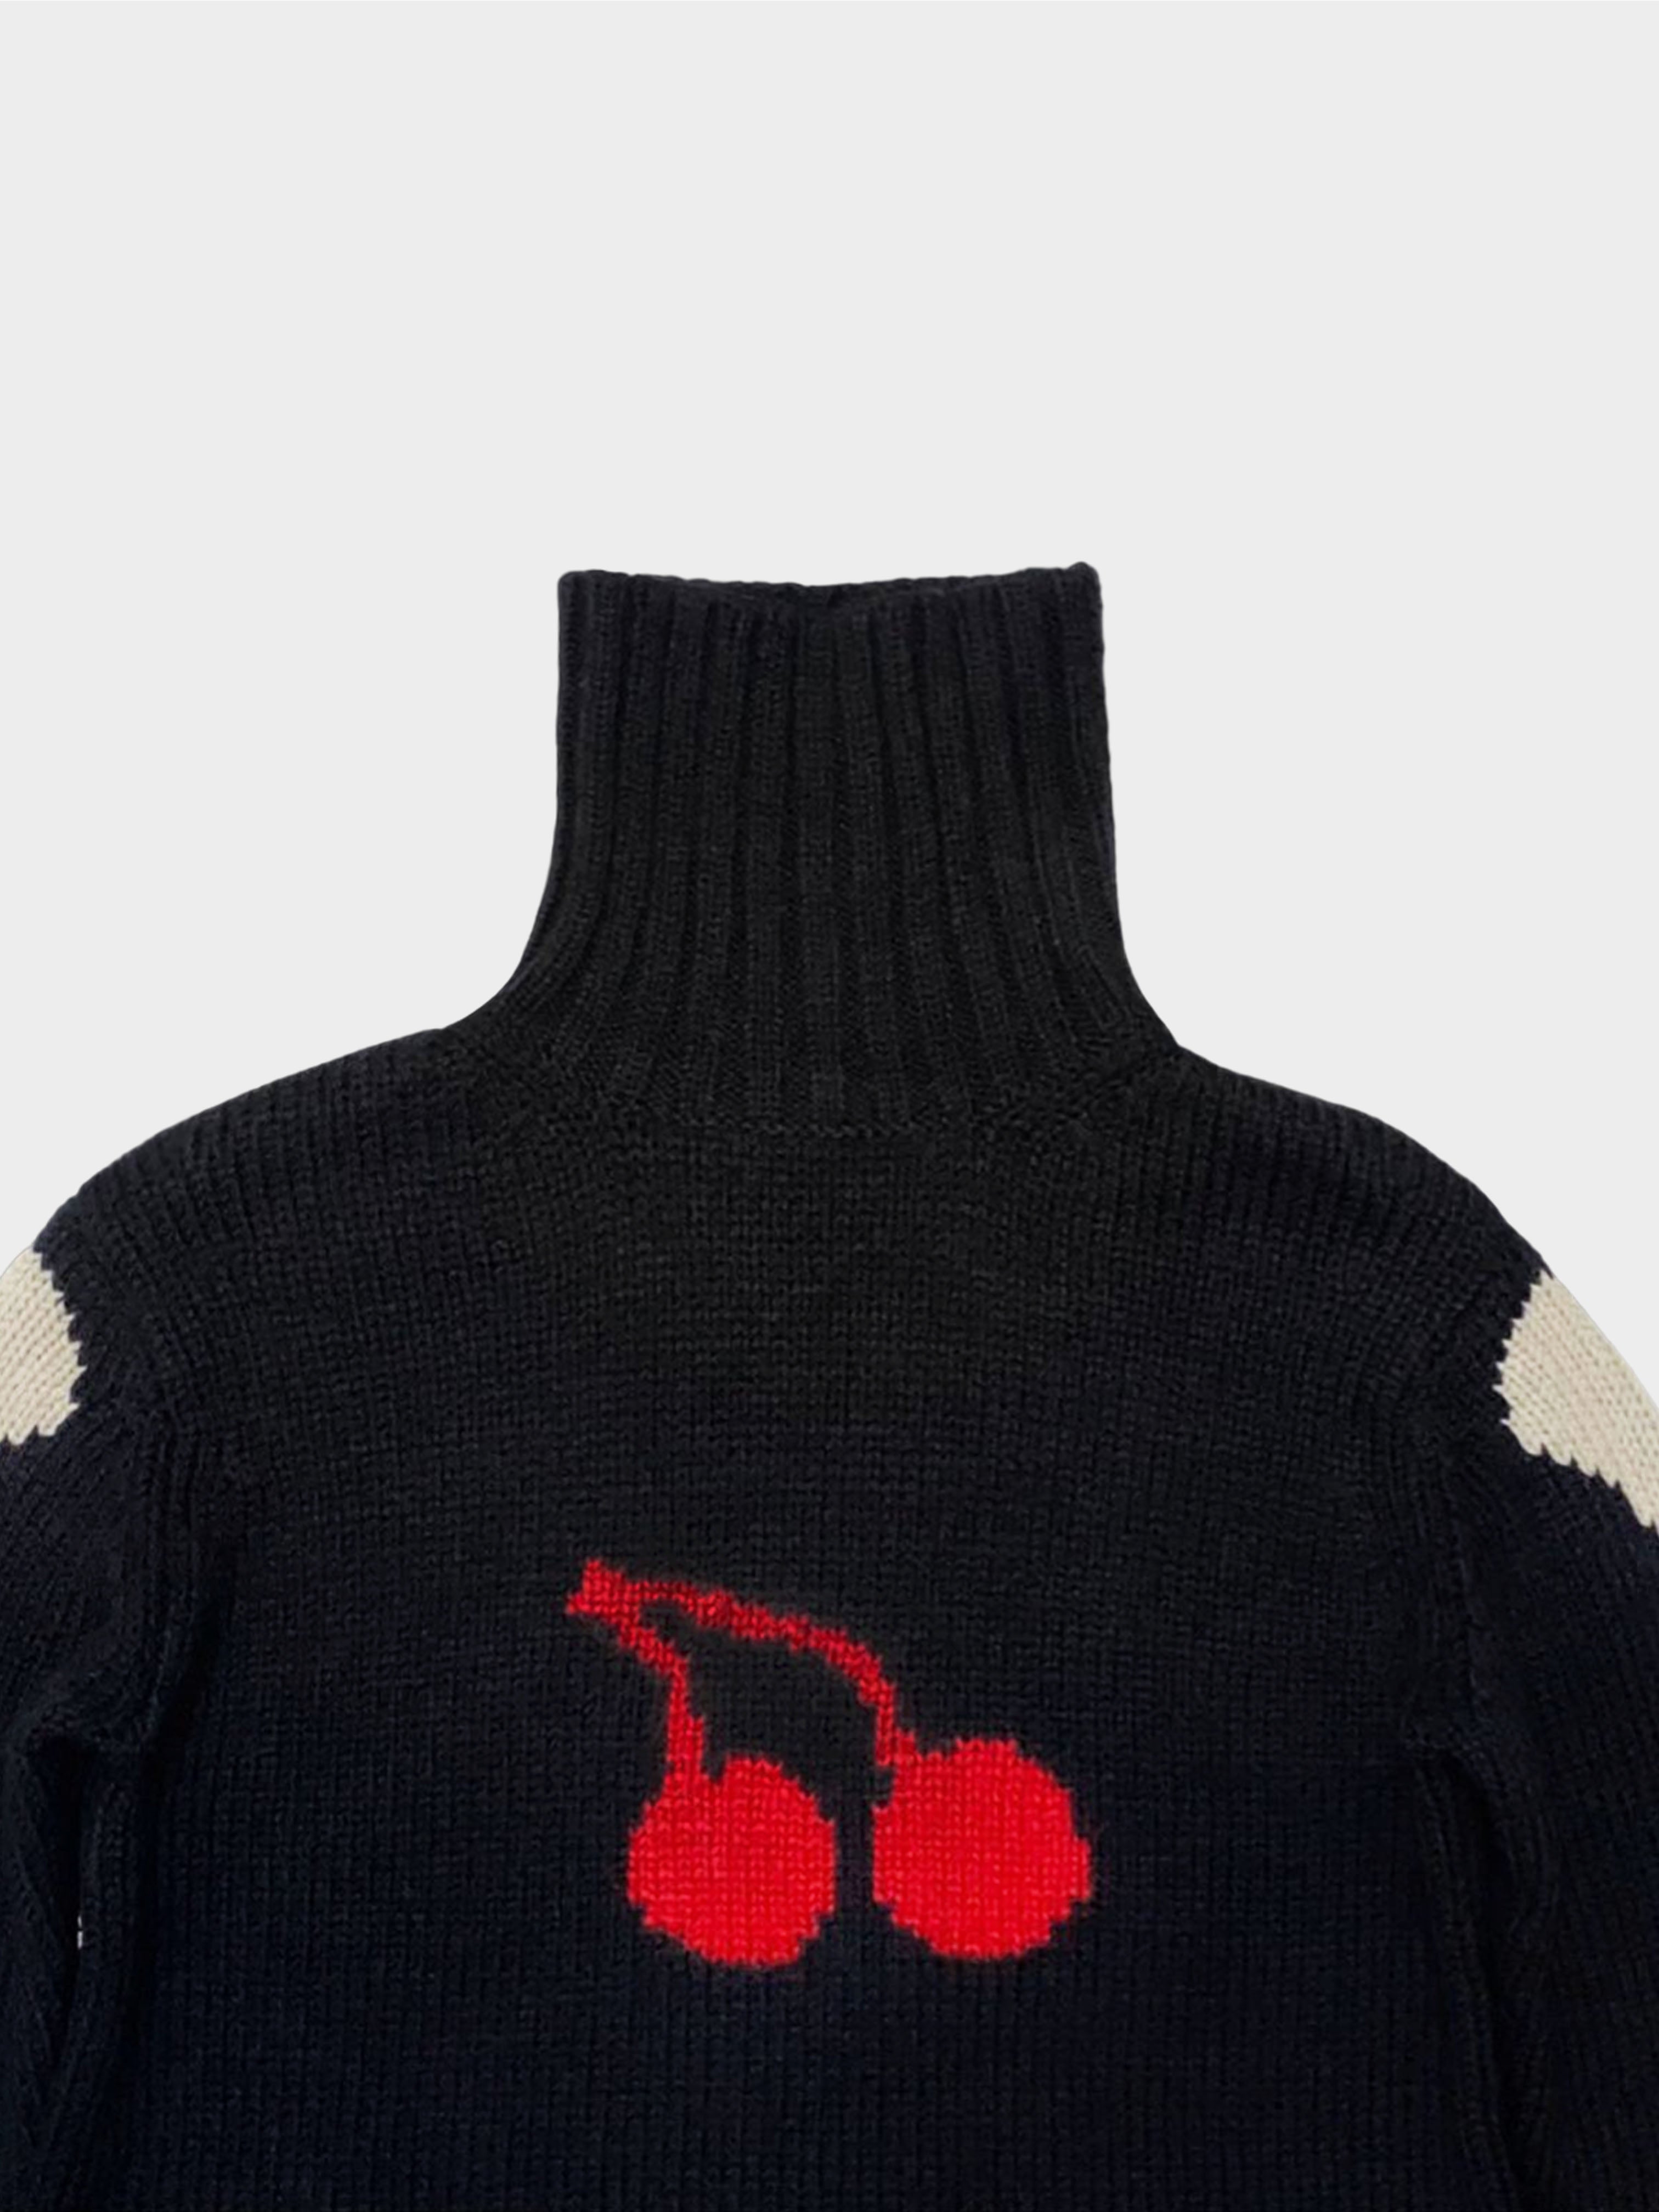 Yohji Yamamoto FW 2011 Cherry and Bones Turtleneck Sweater